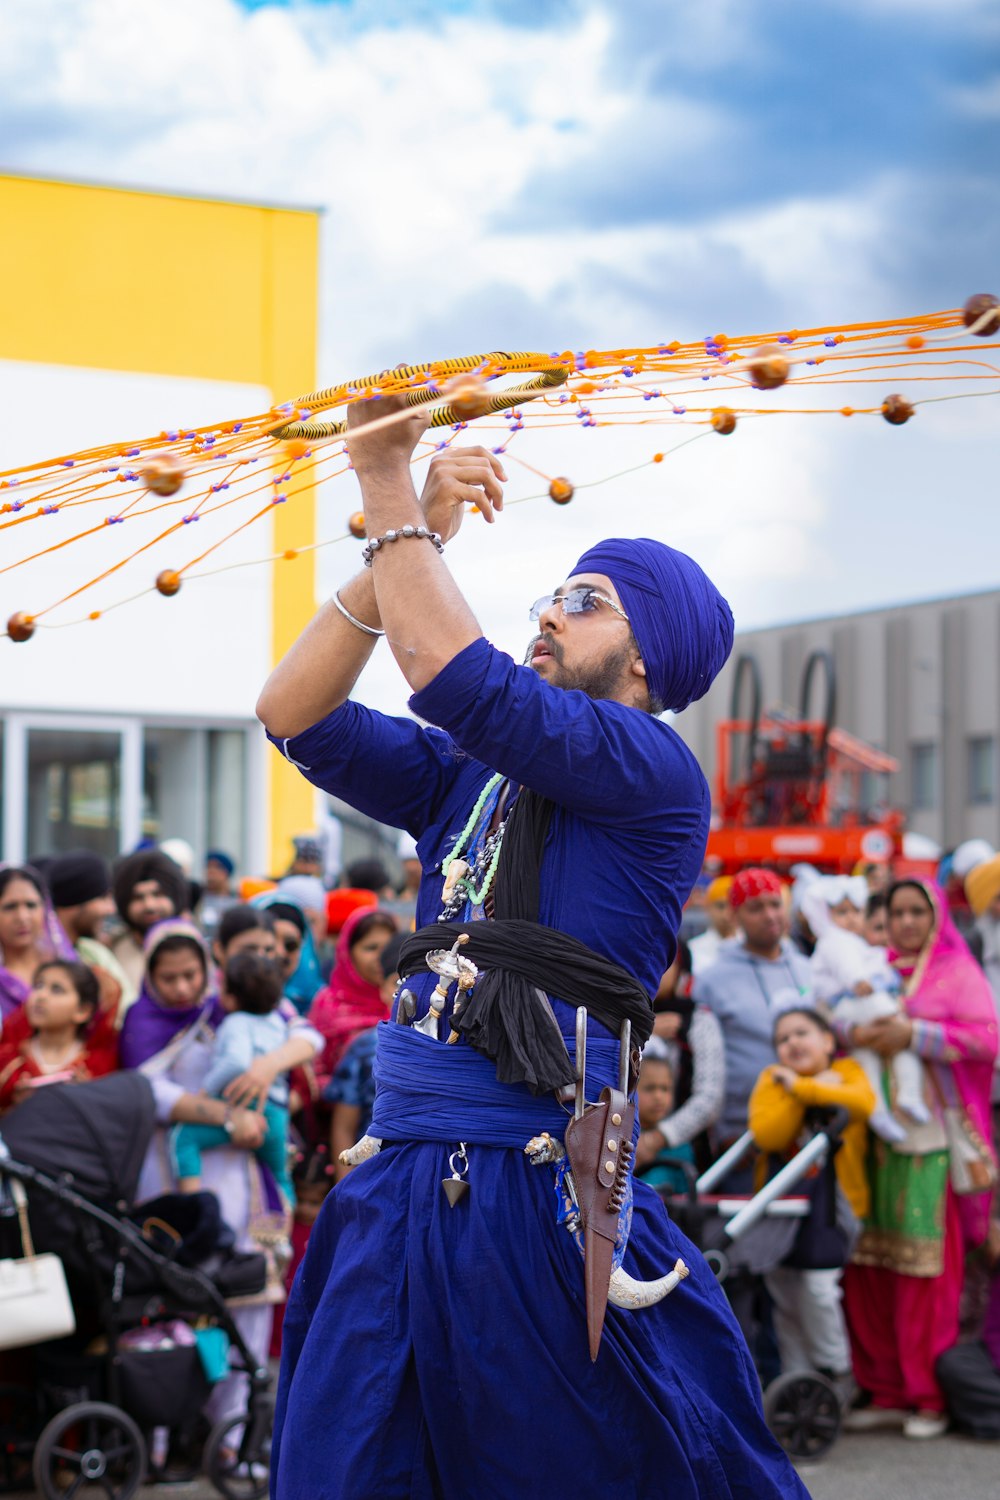 a man in a blue turban performing a dance